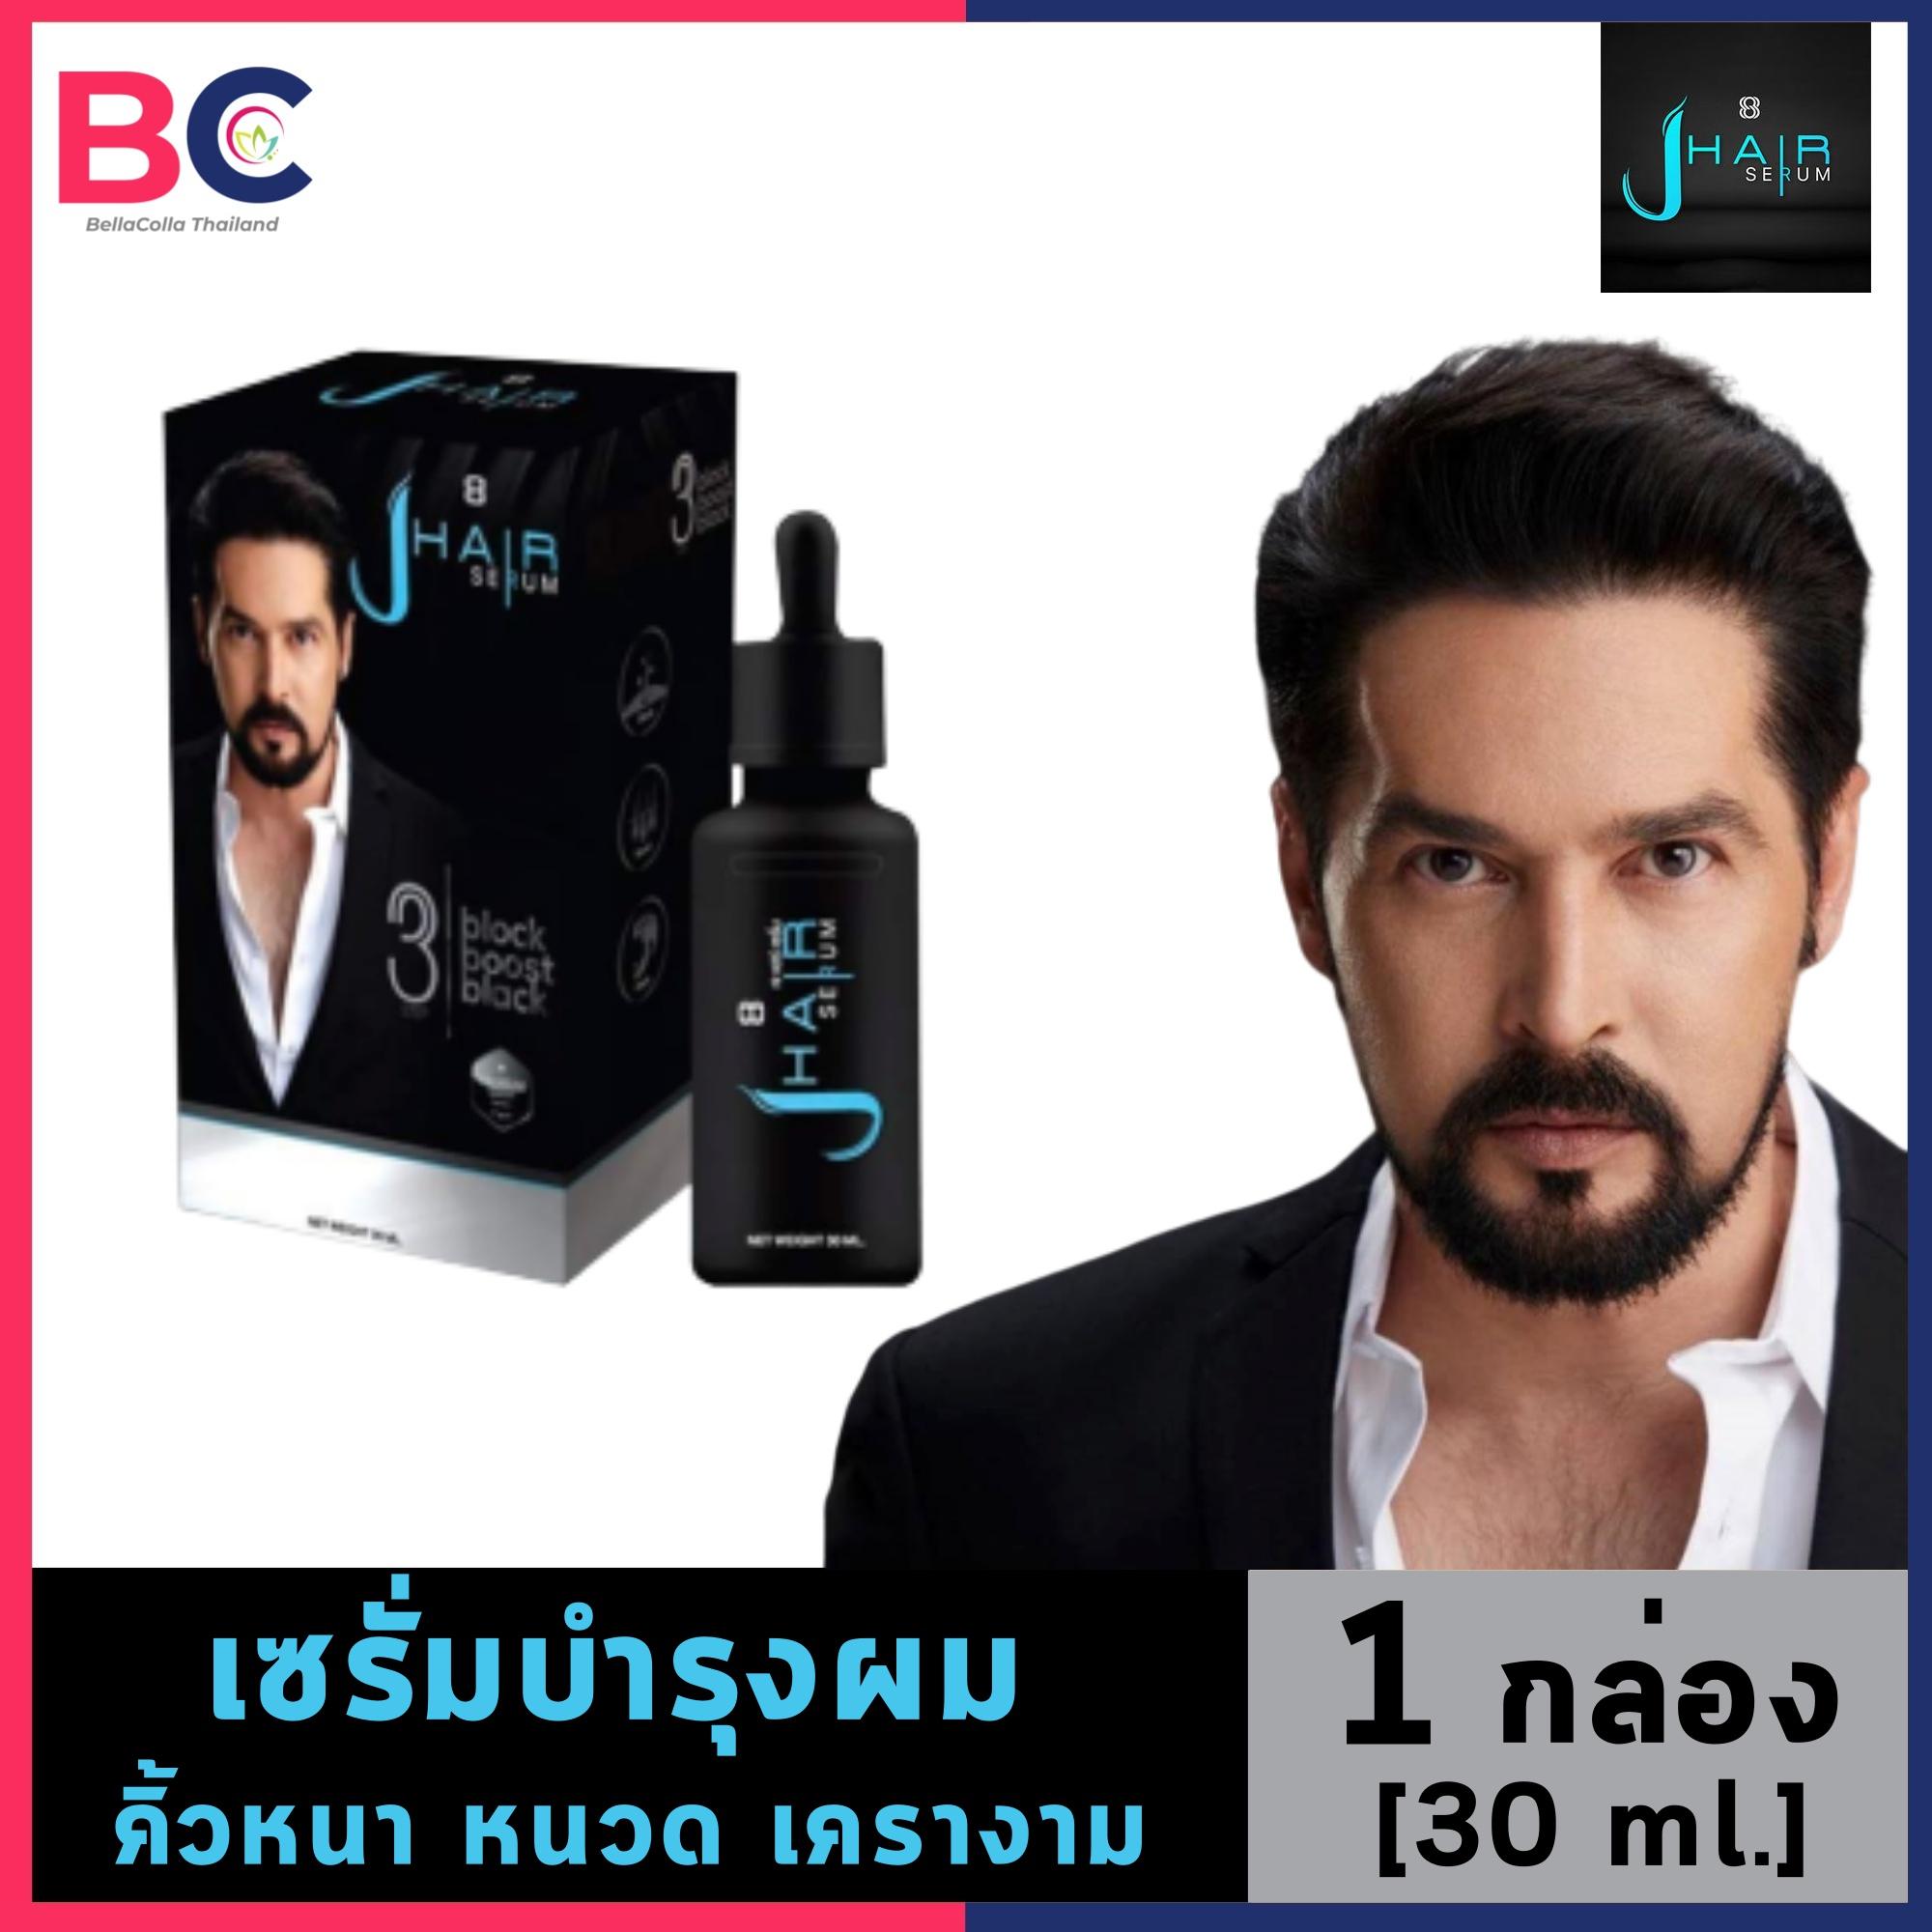 J Hair serum [30 ml.] [1 ชิ้น] เจ แฮร์ เซรั่ม เซรั่มปลูกผม คิ้ว เครา หนวด เจแฮร์ เซรั่ม จอนนี่ แอนโฟเน่ Jhair serum by BellaColla Thailand